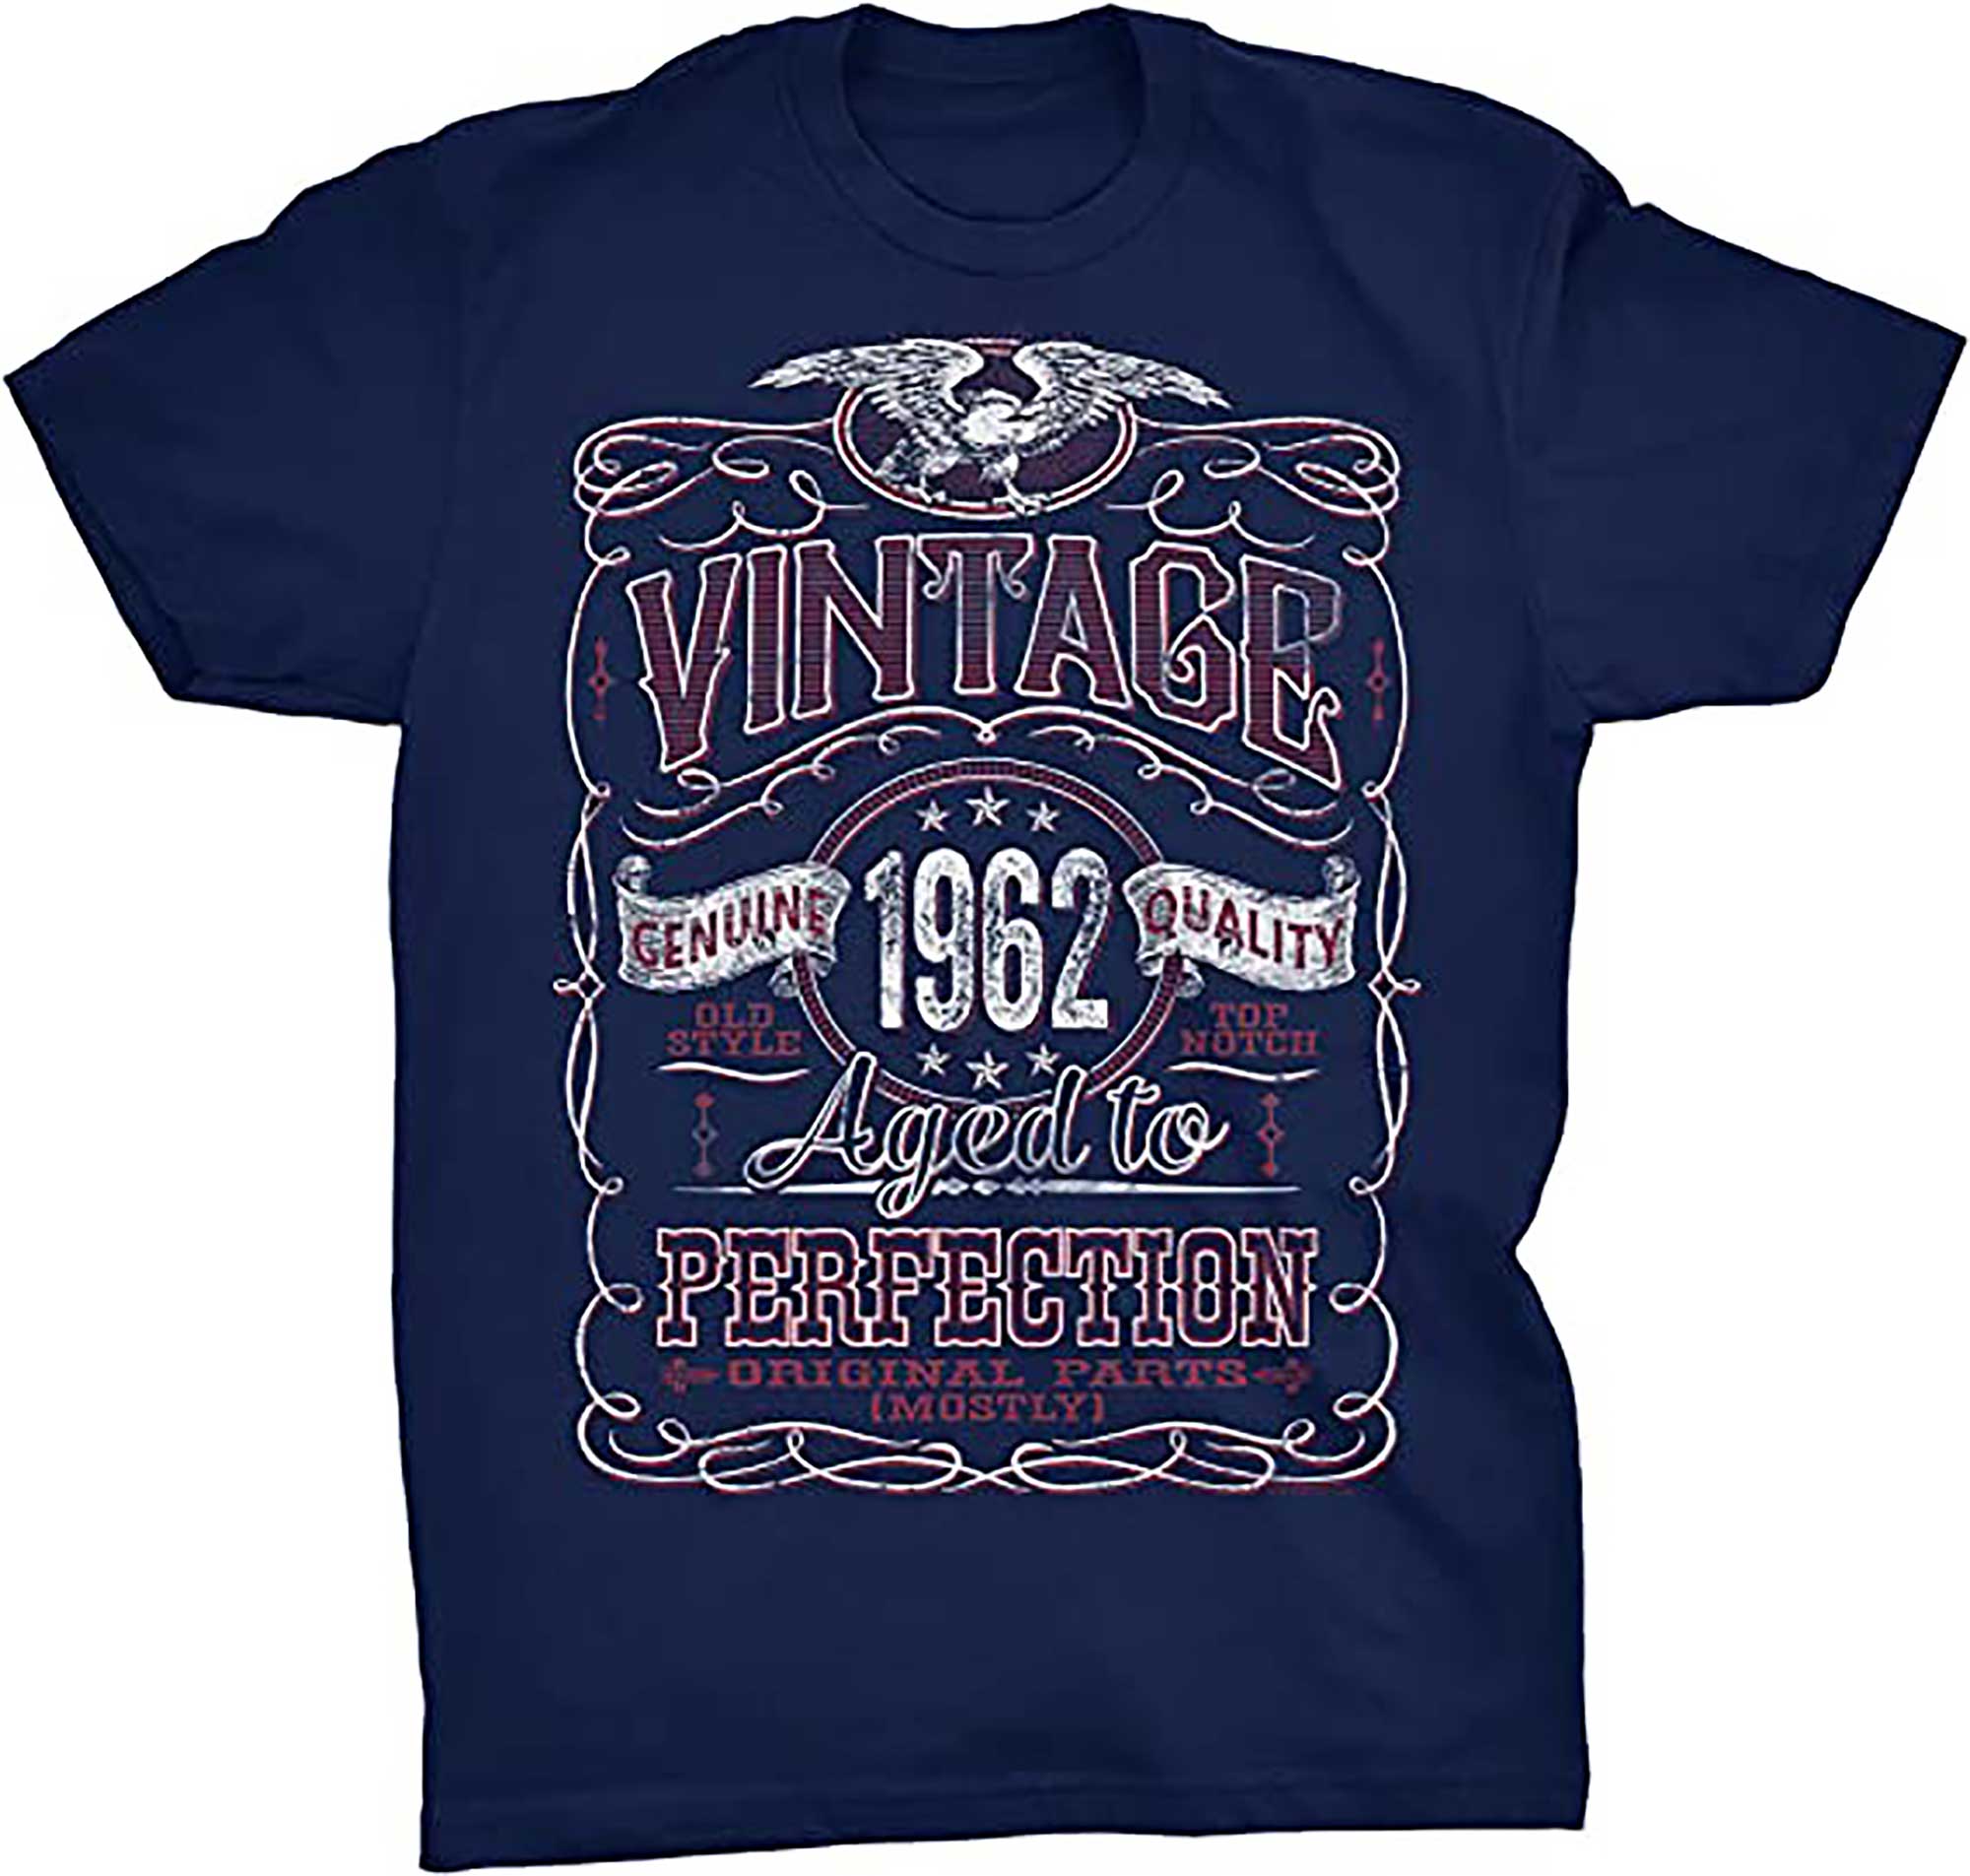 Skitongift Birthday Shirts for Men Vintage 1962 Aged to Perfection Birthday Gift